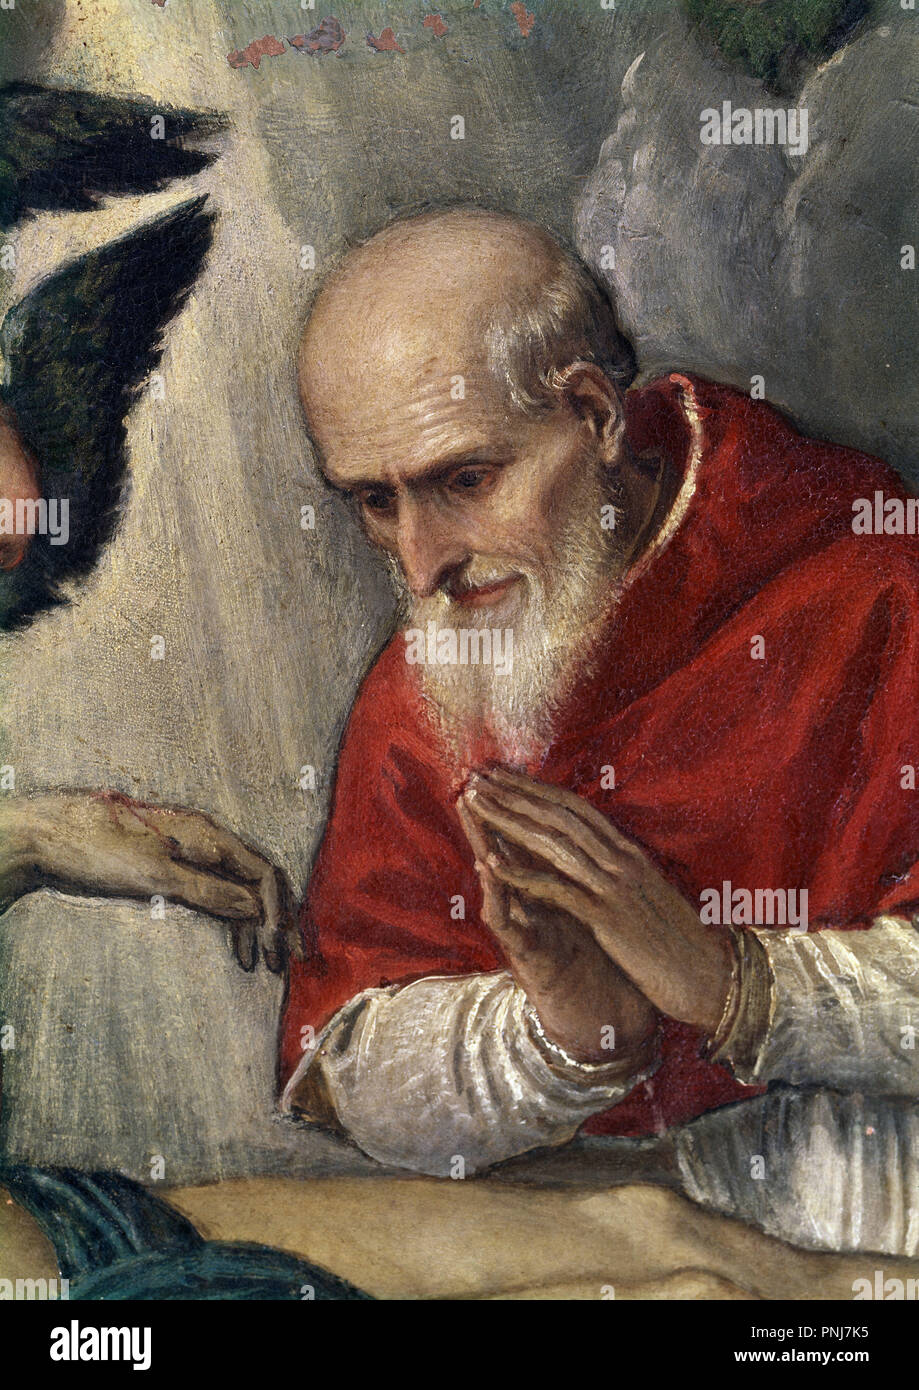 Pius V., Papst von 1566 bis 1572, Christus anzubeten. Detail. Madrid, Prado Museum. Autor: PARRASIO MICHELE. Lage: Museo del Prado - PINTURA. MADRID. Spanien. Stockfoto